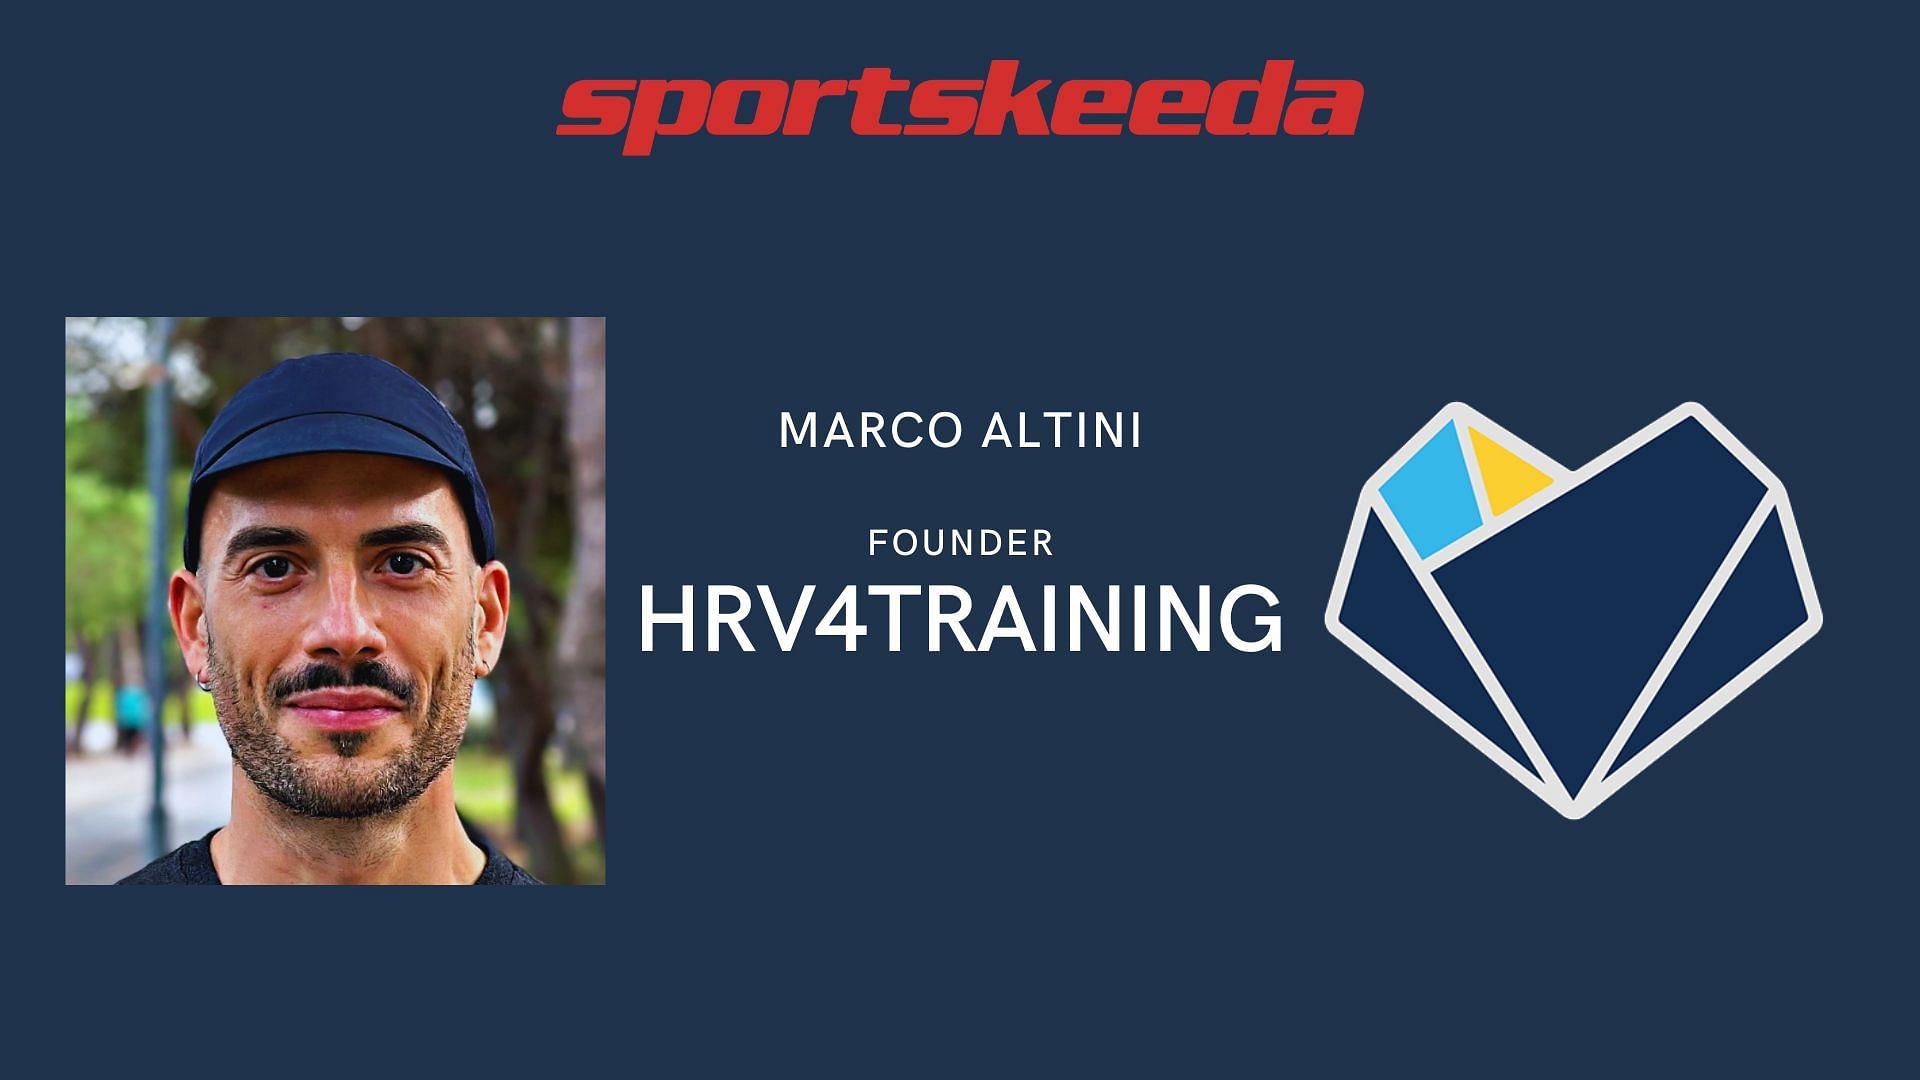 Marco Altini &amp; HRV4training exclusive for sportskeeda